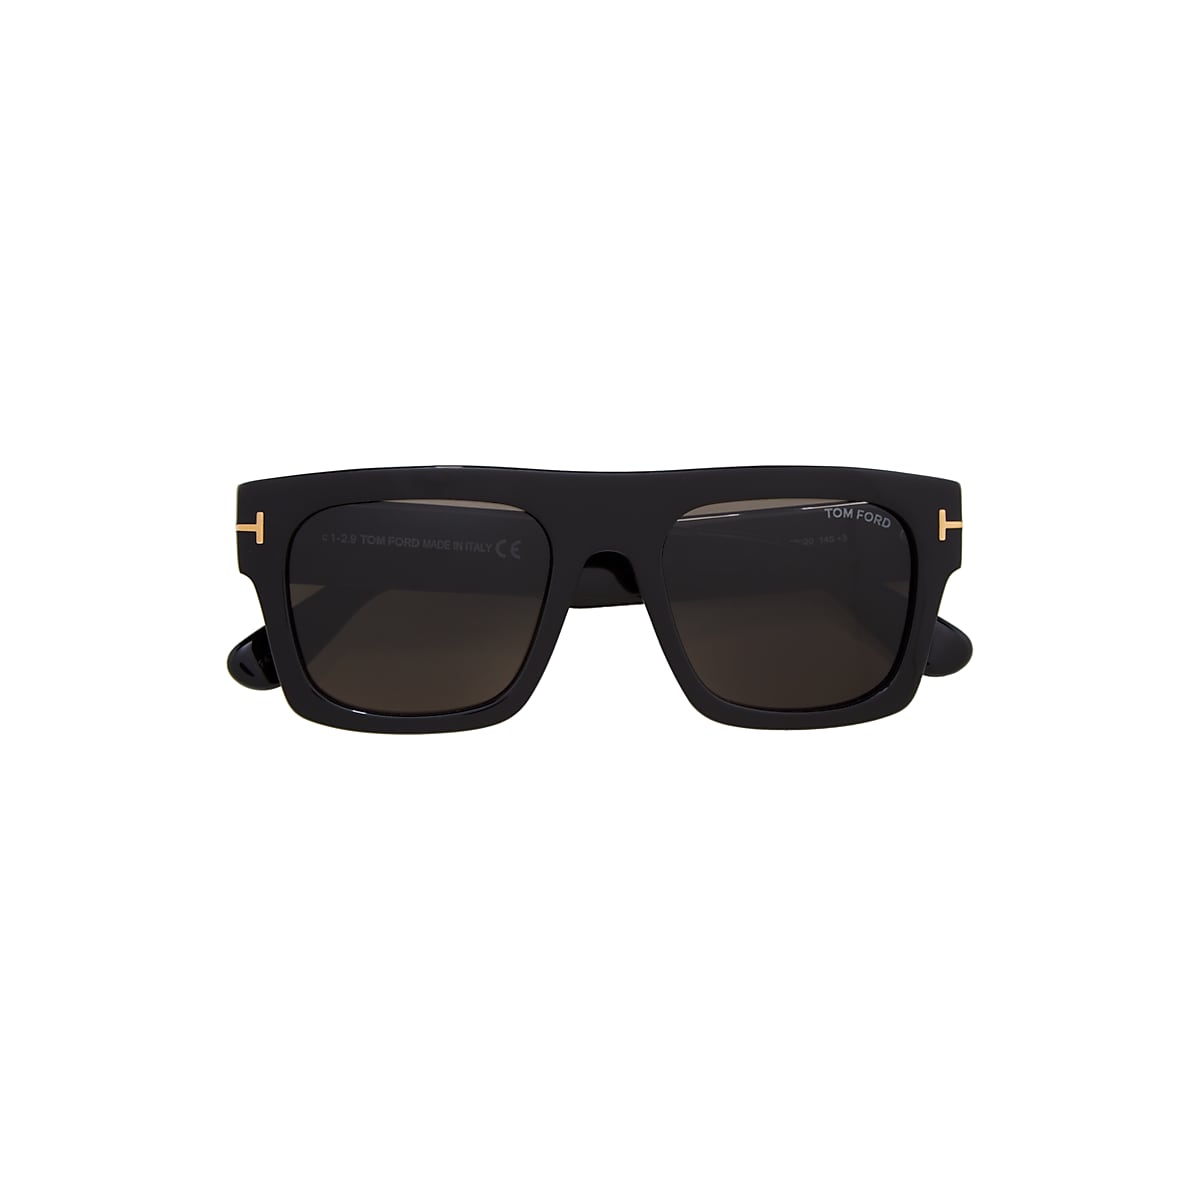 Tom Ford sunglasses black. Extravagant. Oversized frames. - philipshigh ...